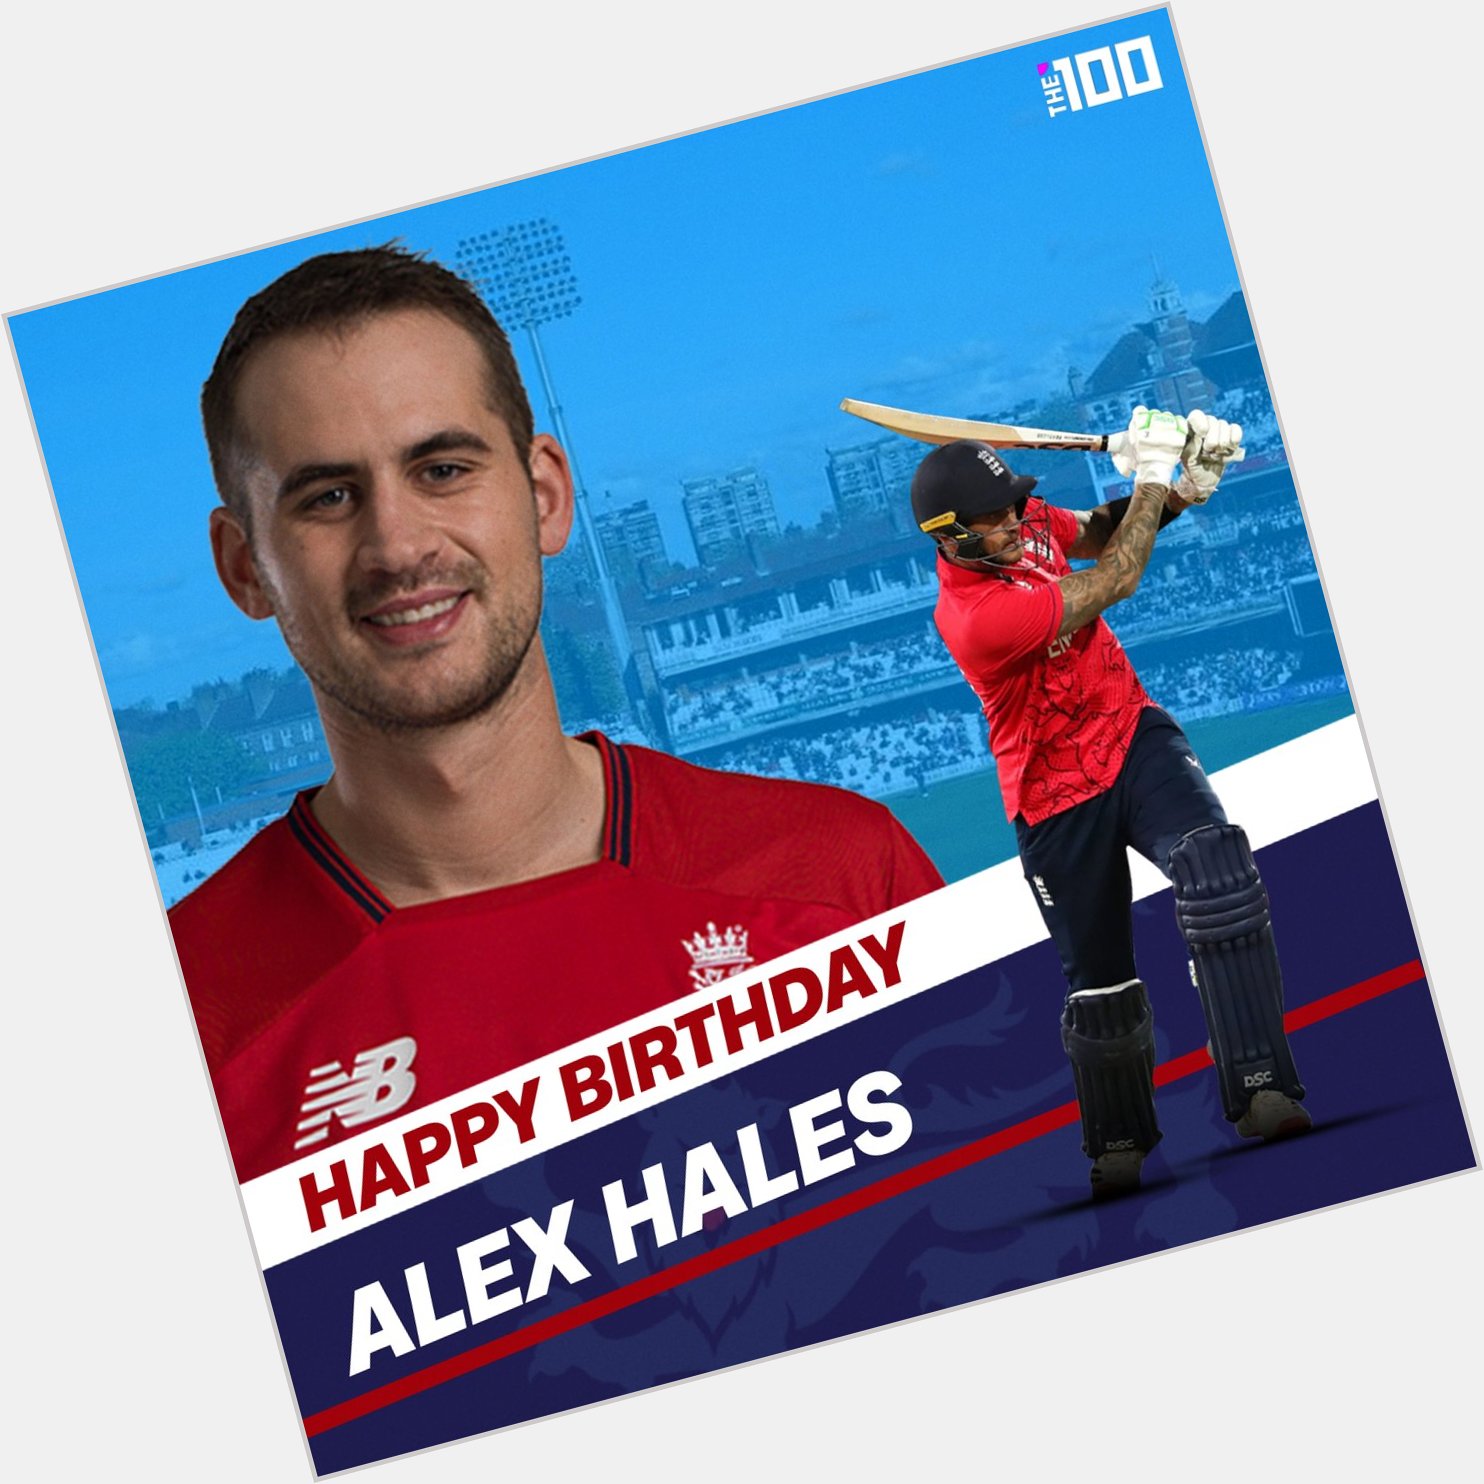  Wishing Alex Hales a very Happy Birthday 